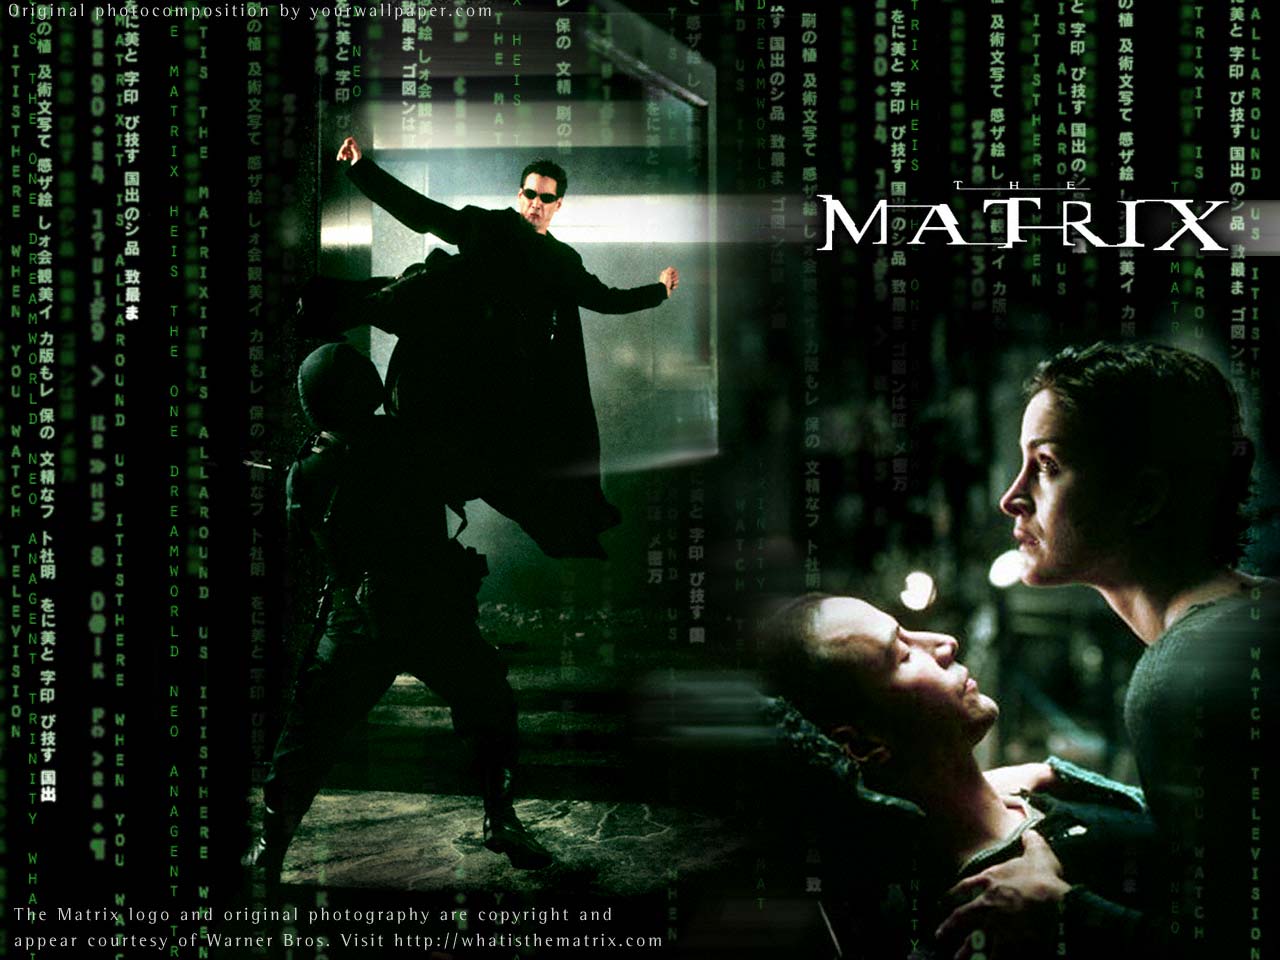 the matrix wallpaper - Neo, Trinity, Morpheus and crew - free ...